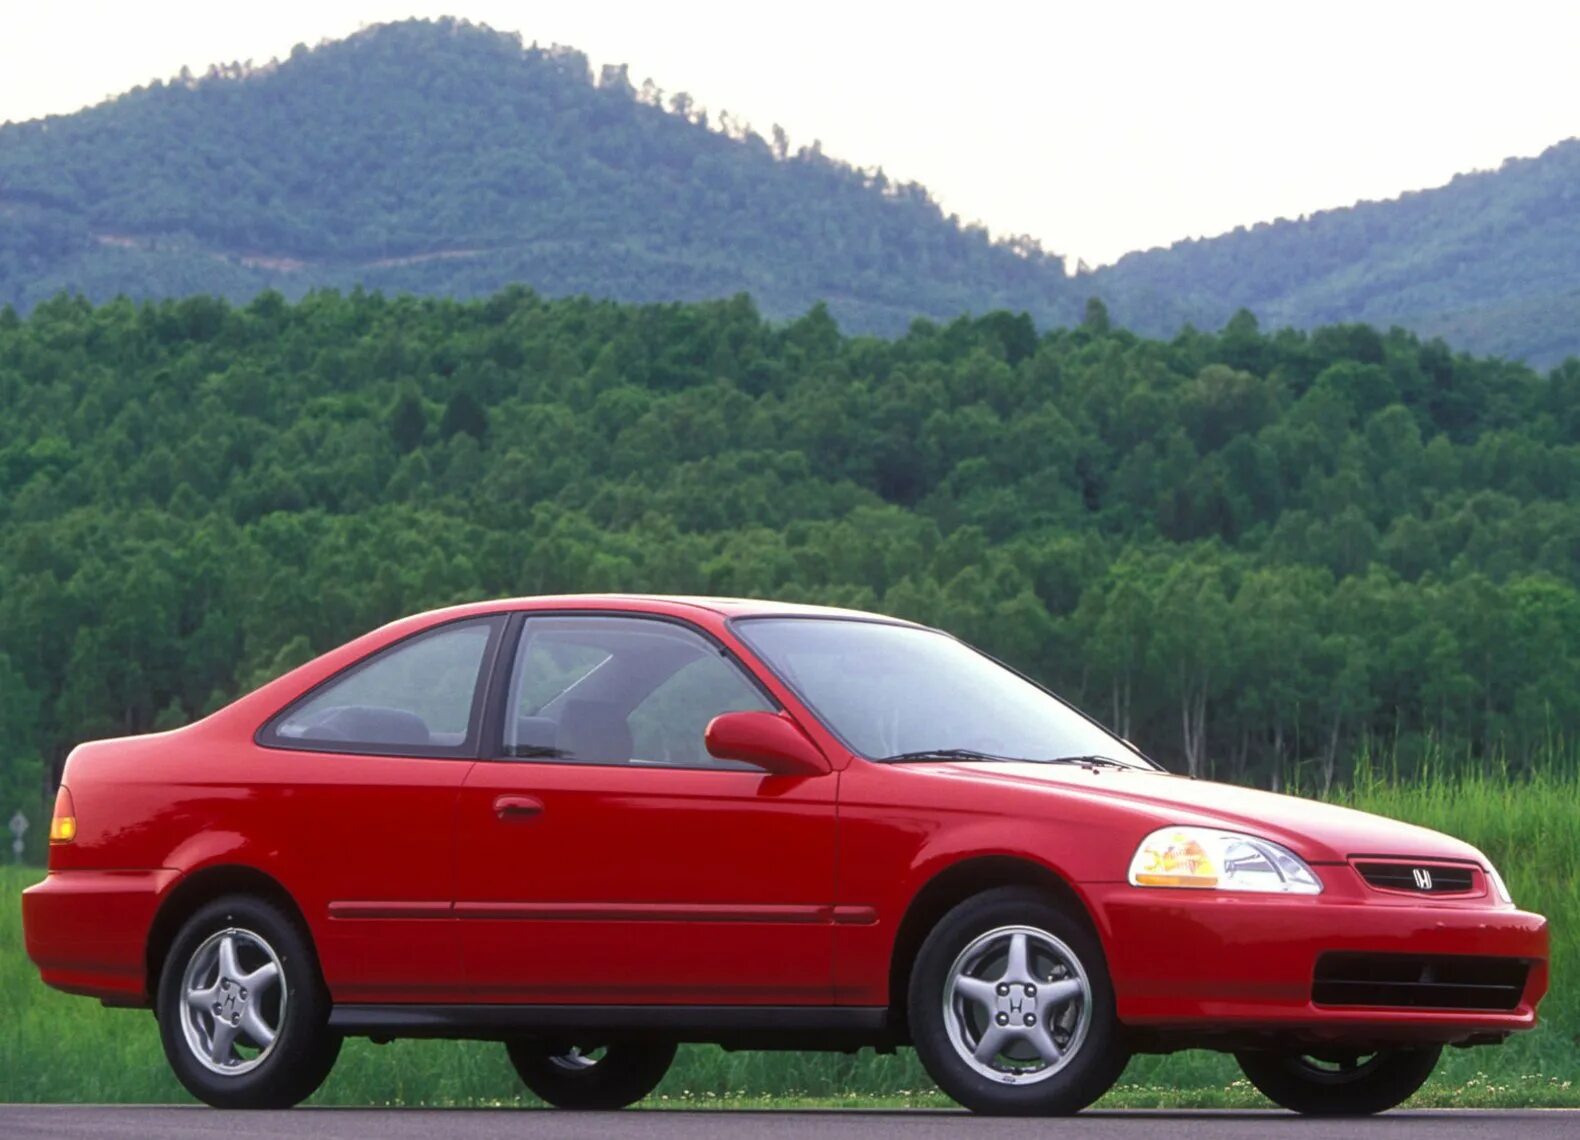 Honda civic купе. Honda Civic Coupe. Honda Civic Coupe 1996. Honda Civic 6 Coupe. Honda Civic 6 поколение 1995 - 2000.